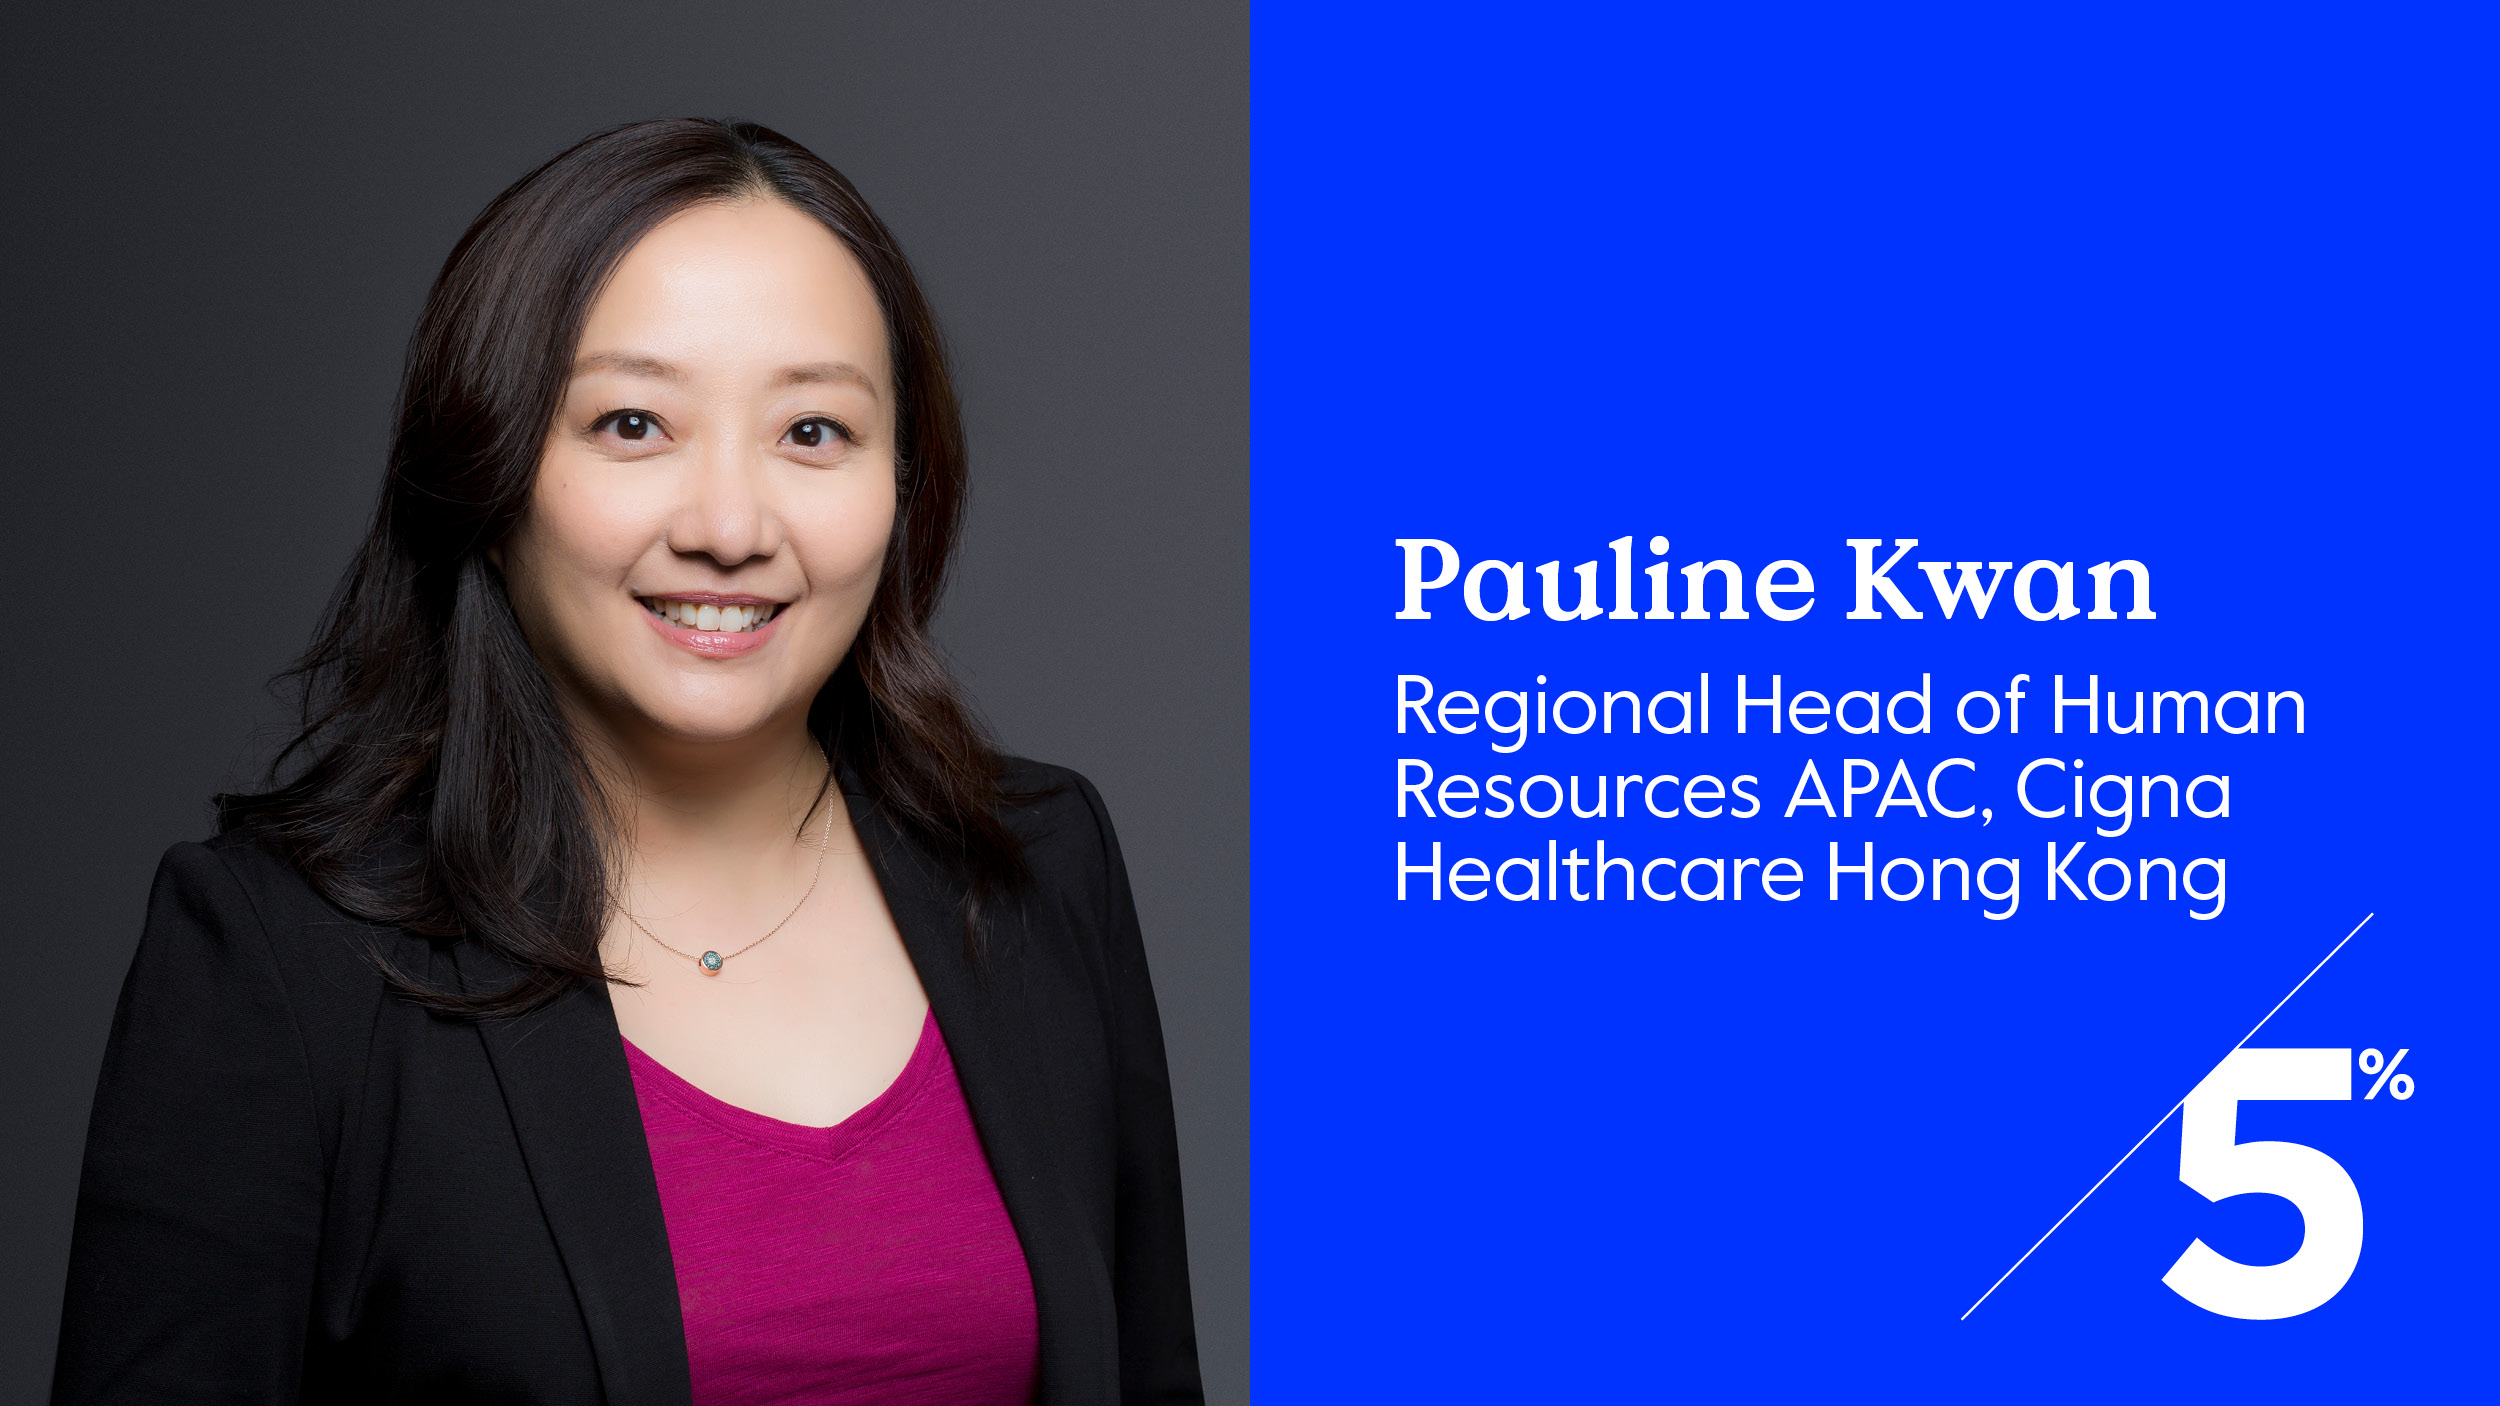 Pauline Kwan, Regional Head of Human Resources